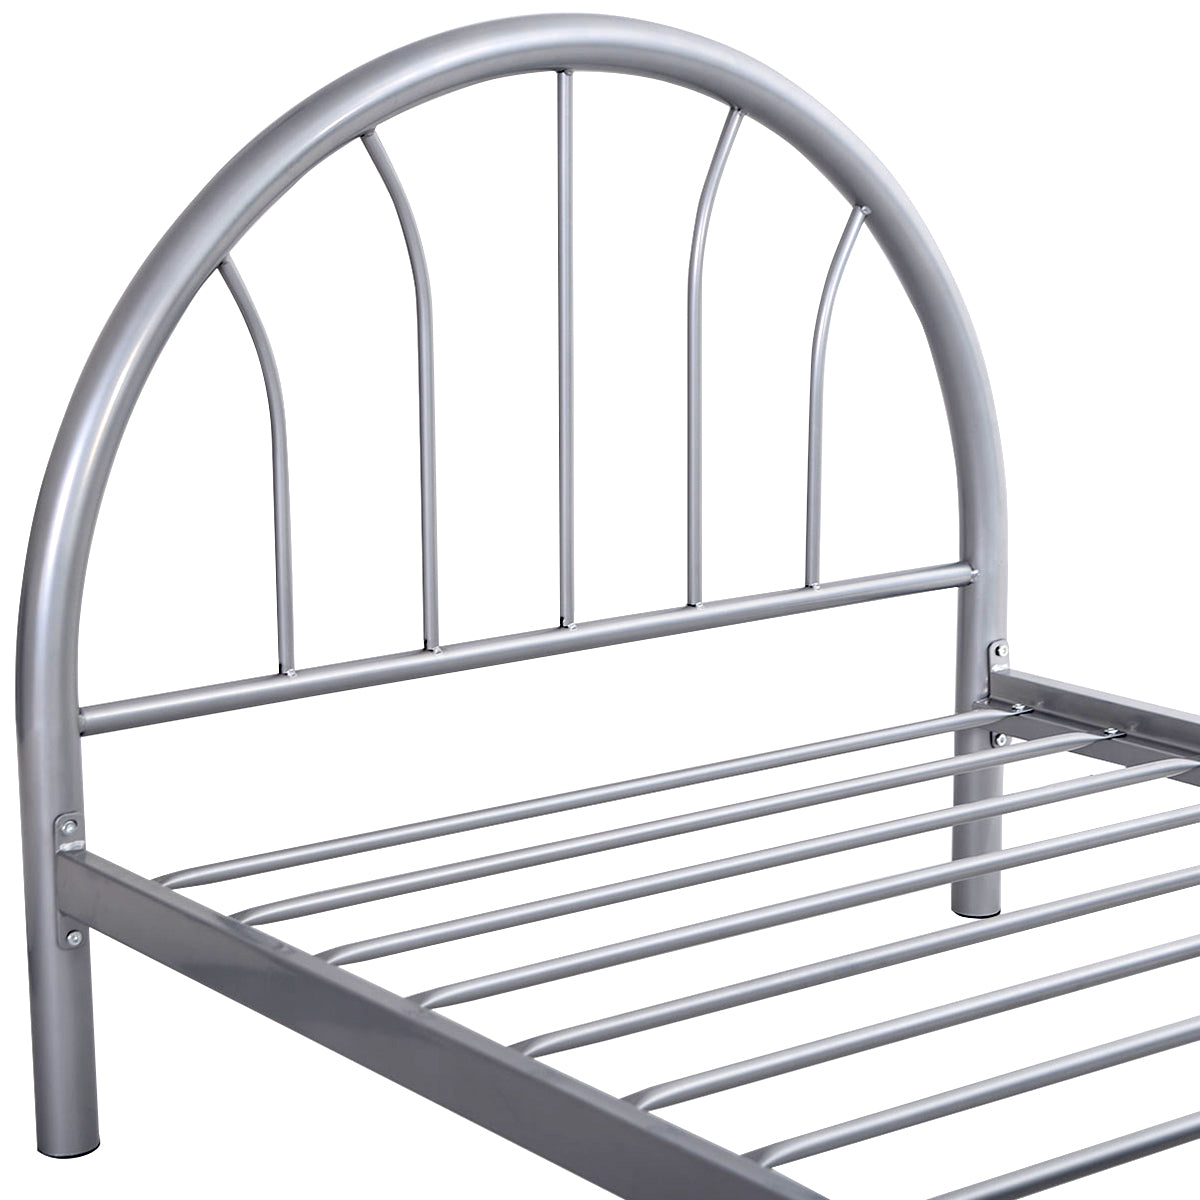 Giantex 83" x 42" x 35" Metal Bed Platform Frame Twin Size Bedroom Home Furniture (Black)